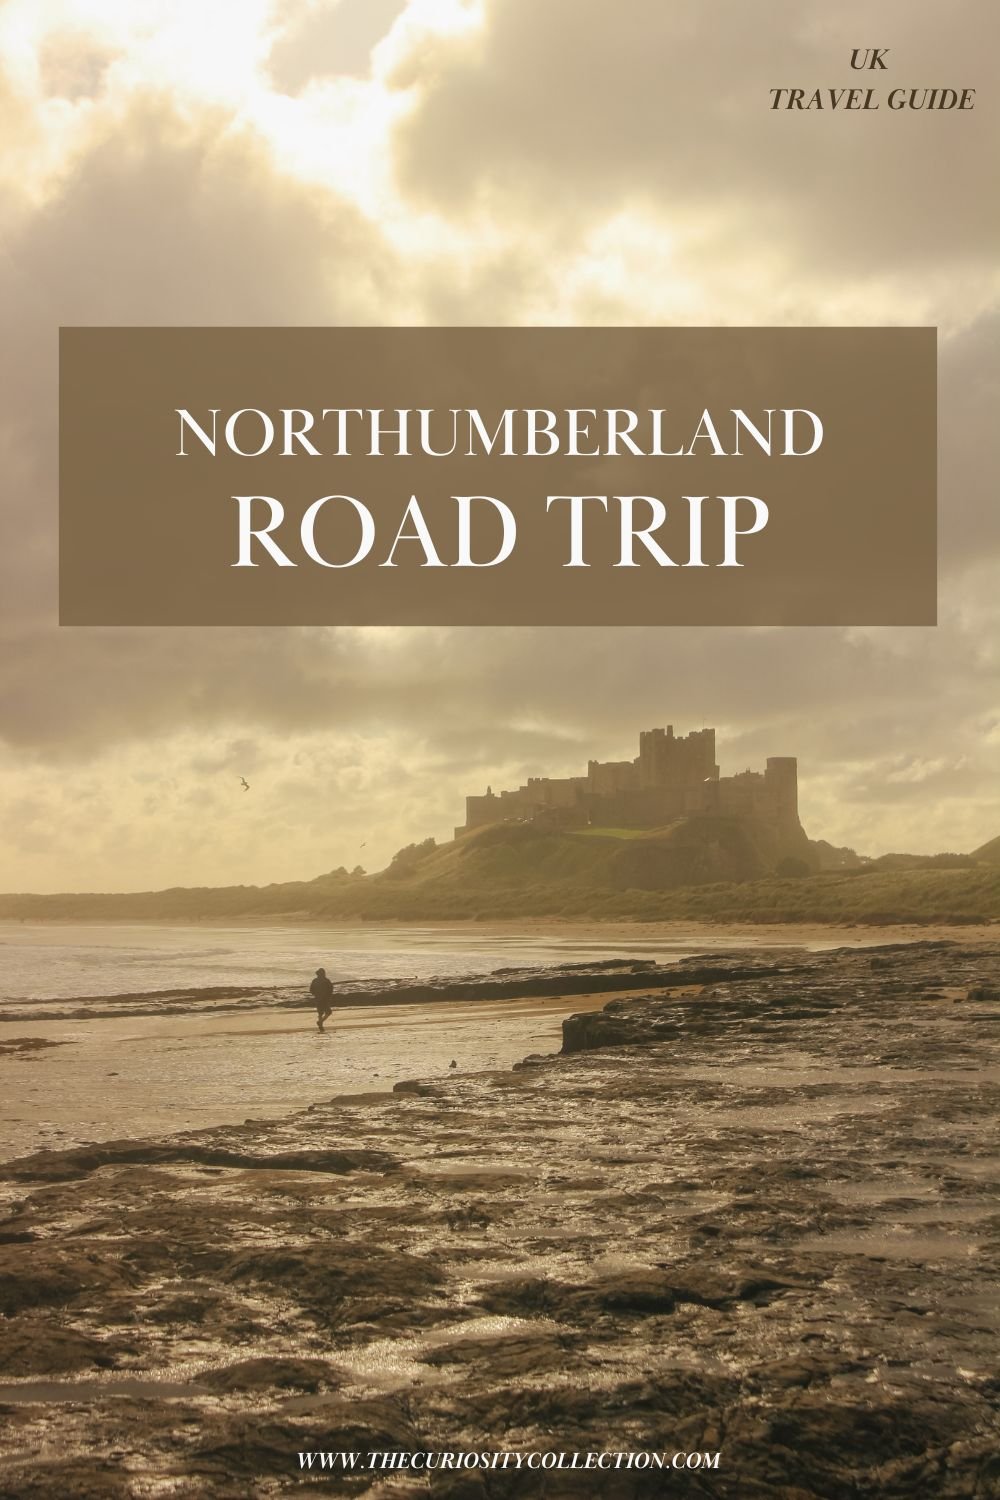 The Northumberland 250 travel guide.jpg